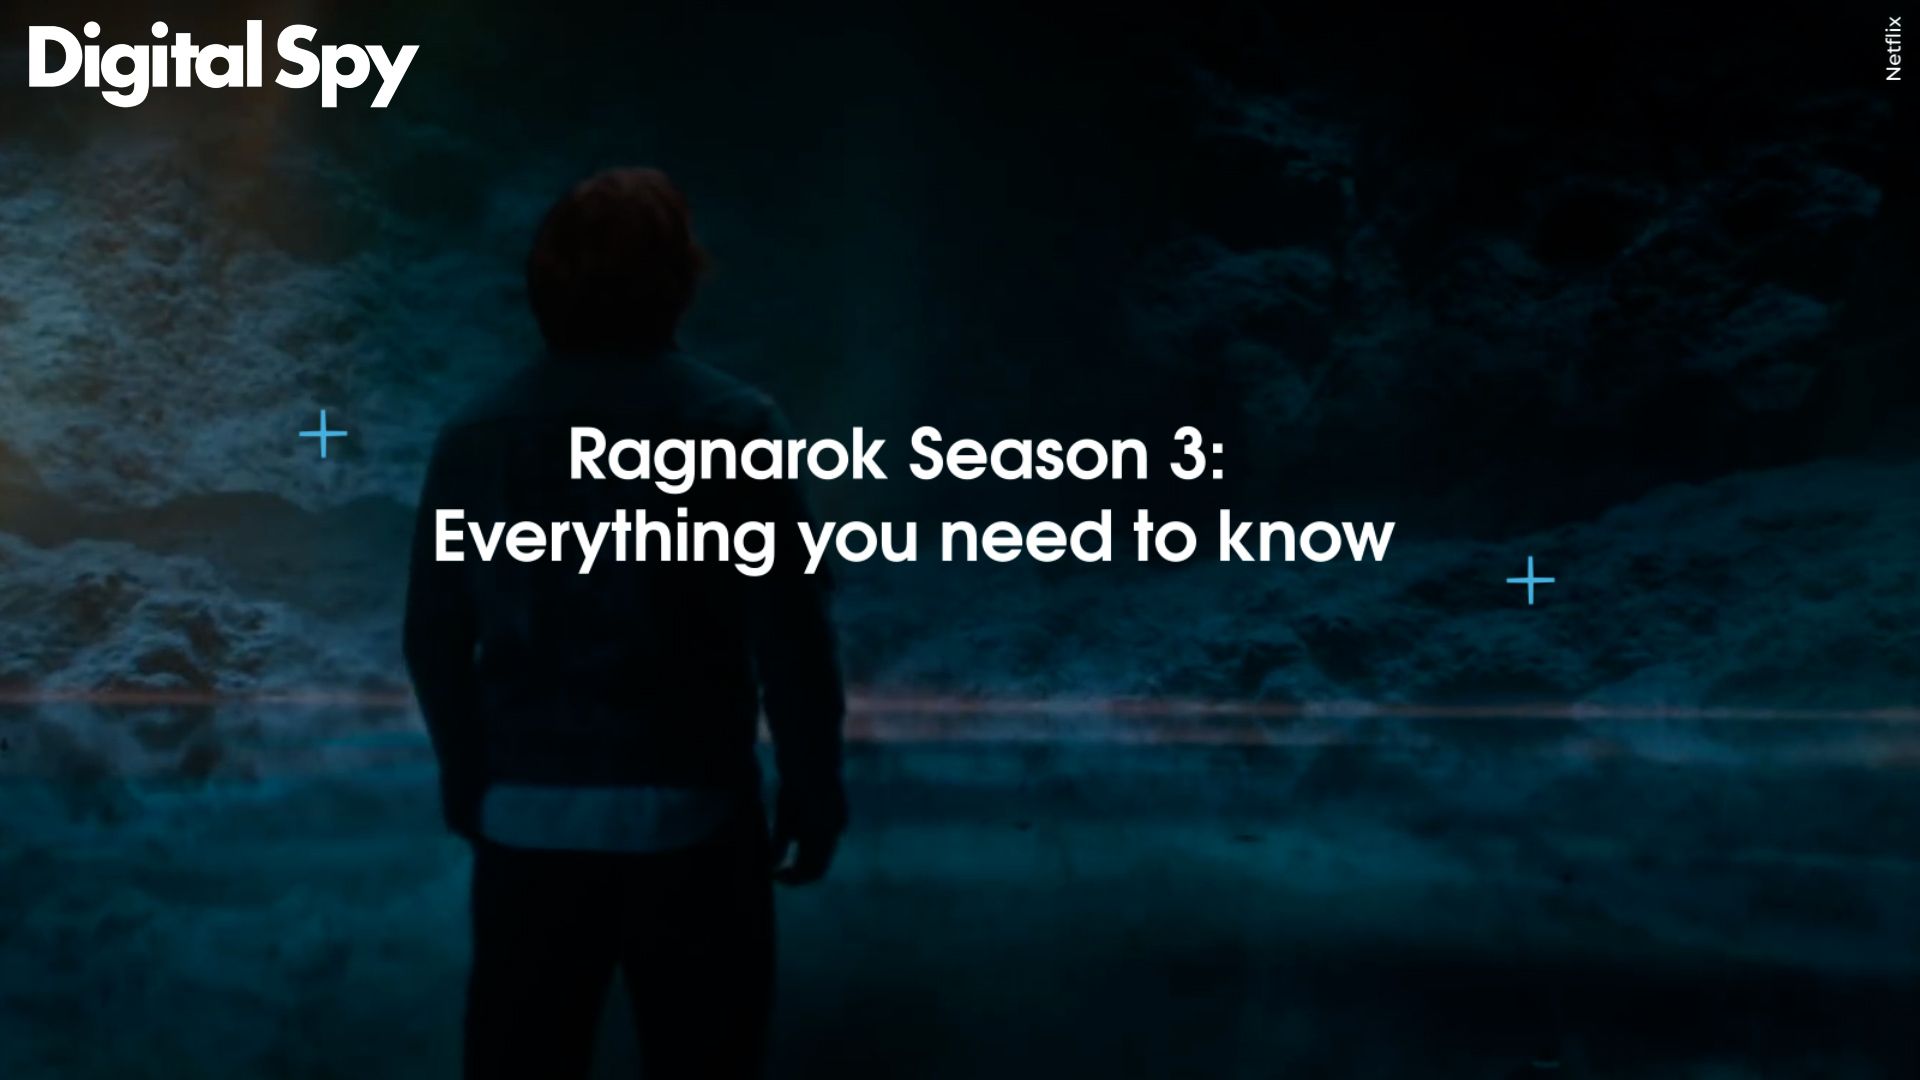 Ragnarok Season 3: Cast, Story & Everything We Know